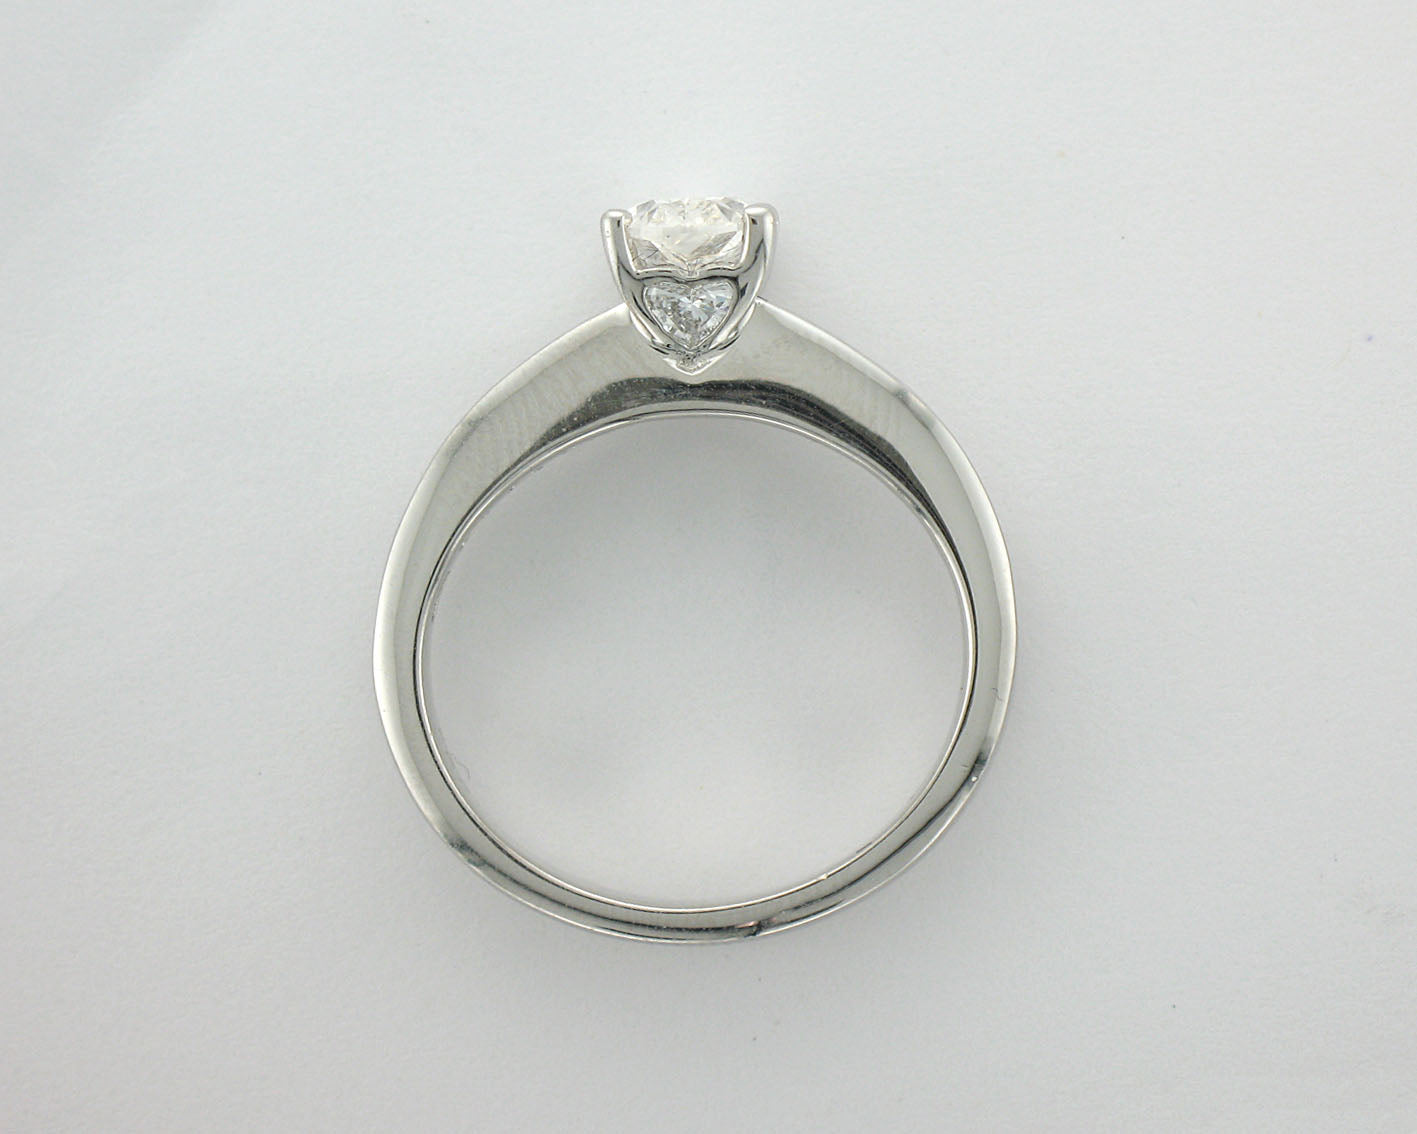 18ct white gold Diamond Engagement Ring